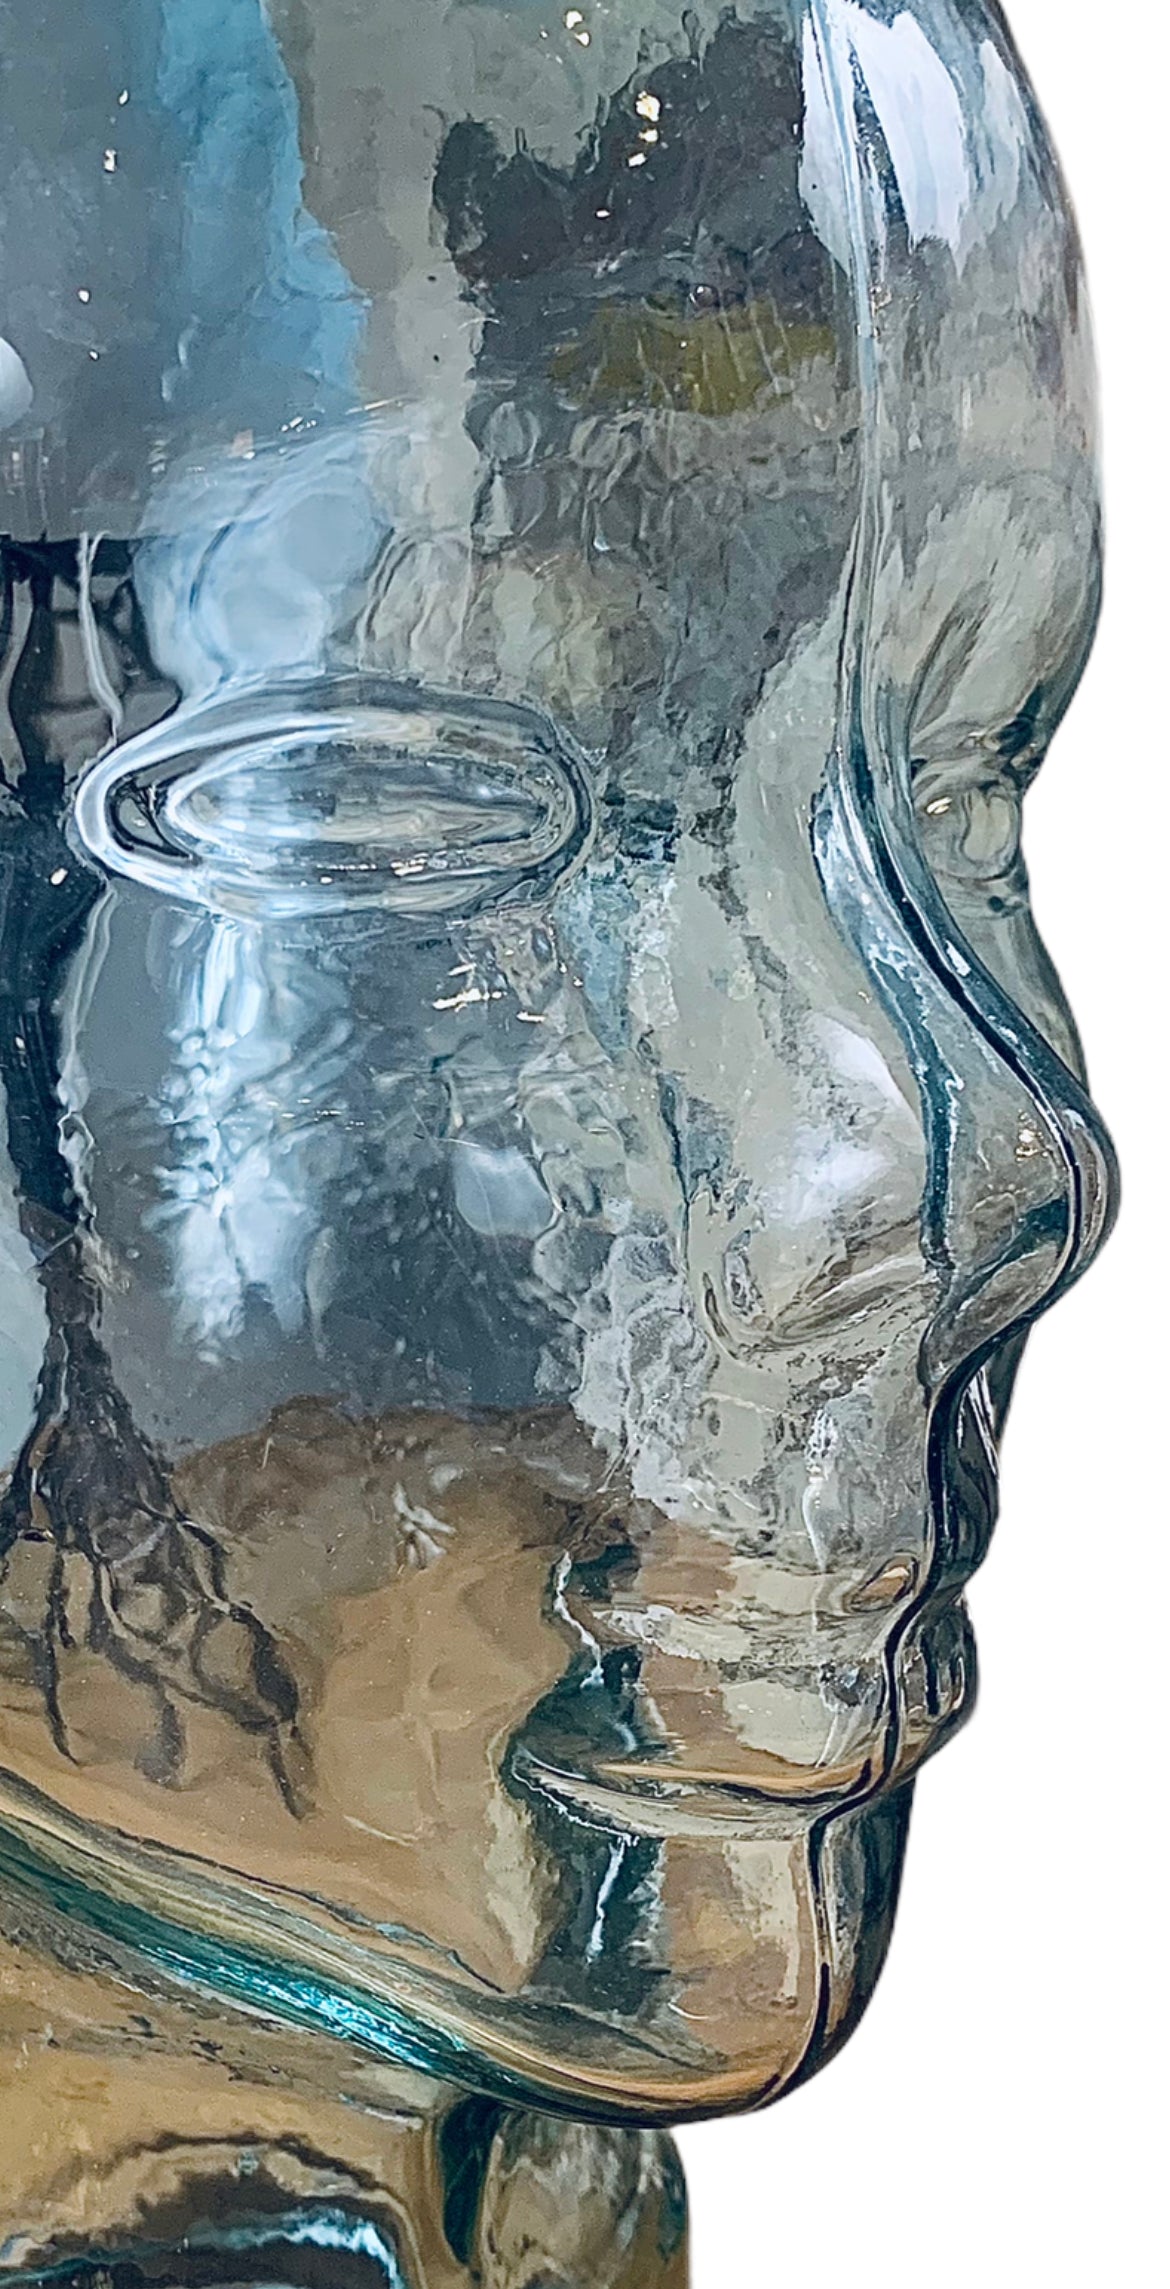 “Piero Fornasetti” Glass Head (Vintage)(SOLD)